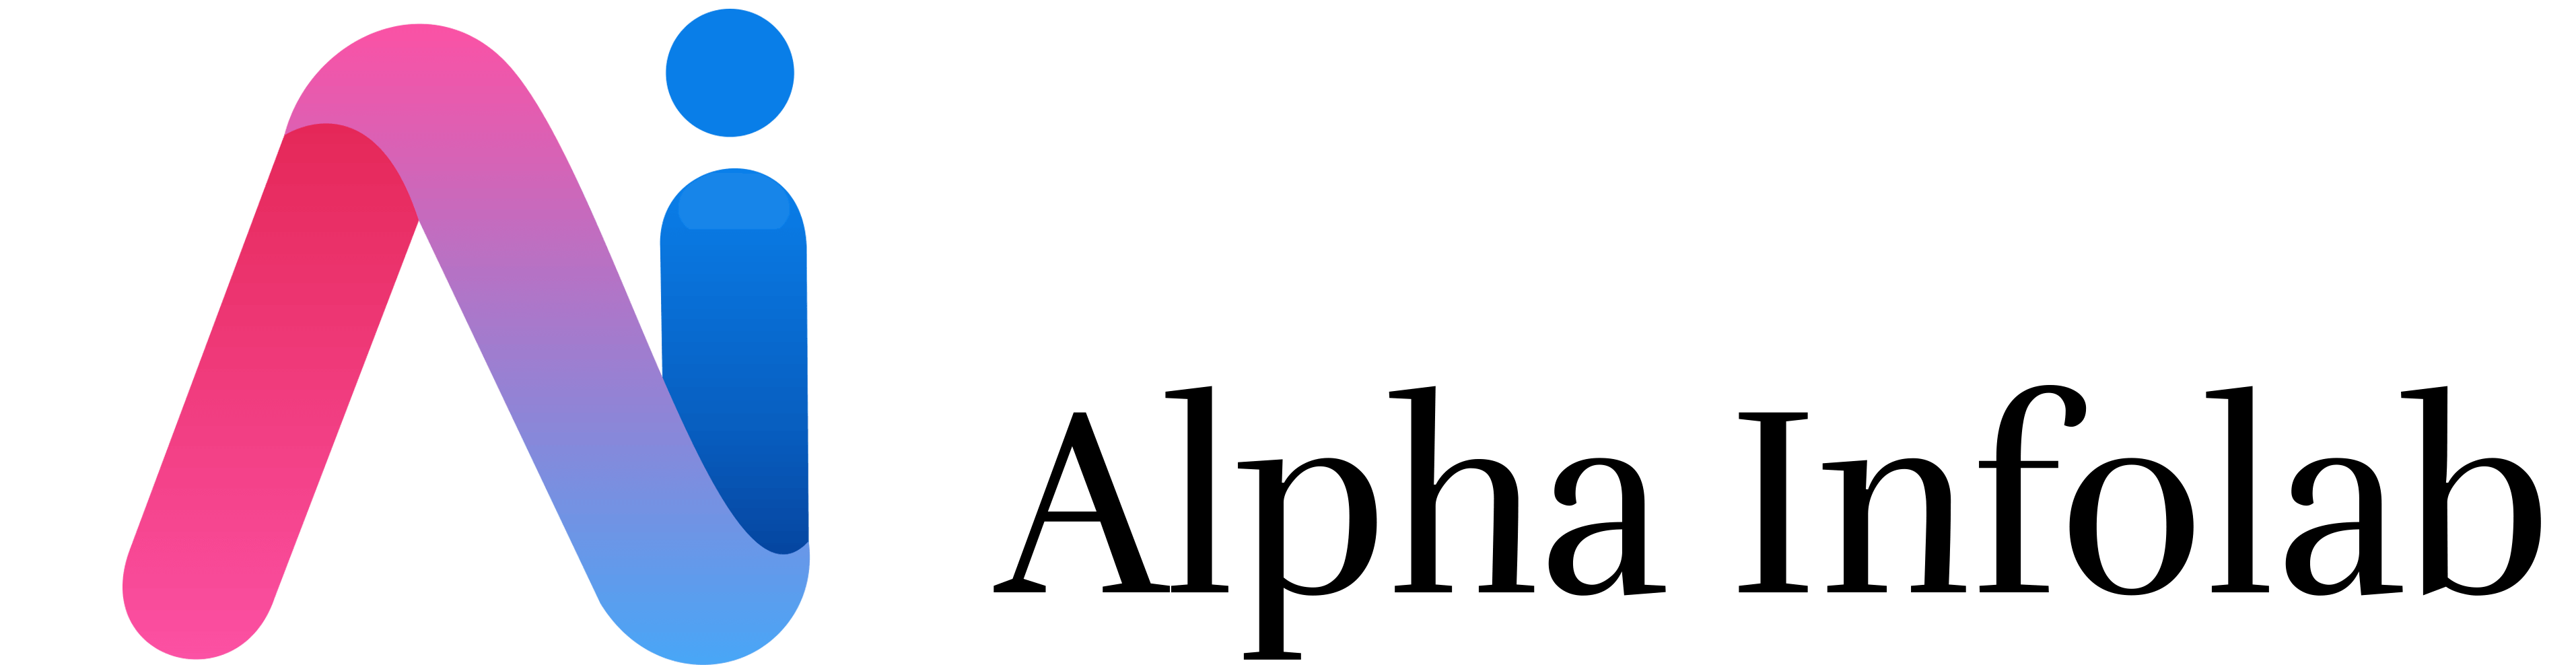 Alphinfolabs logo